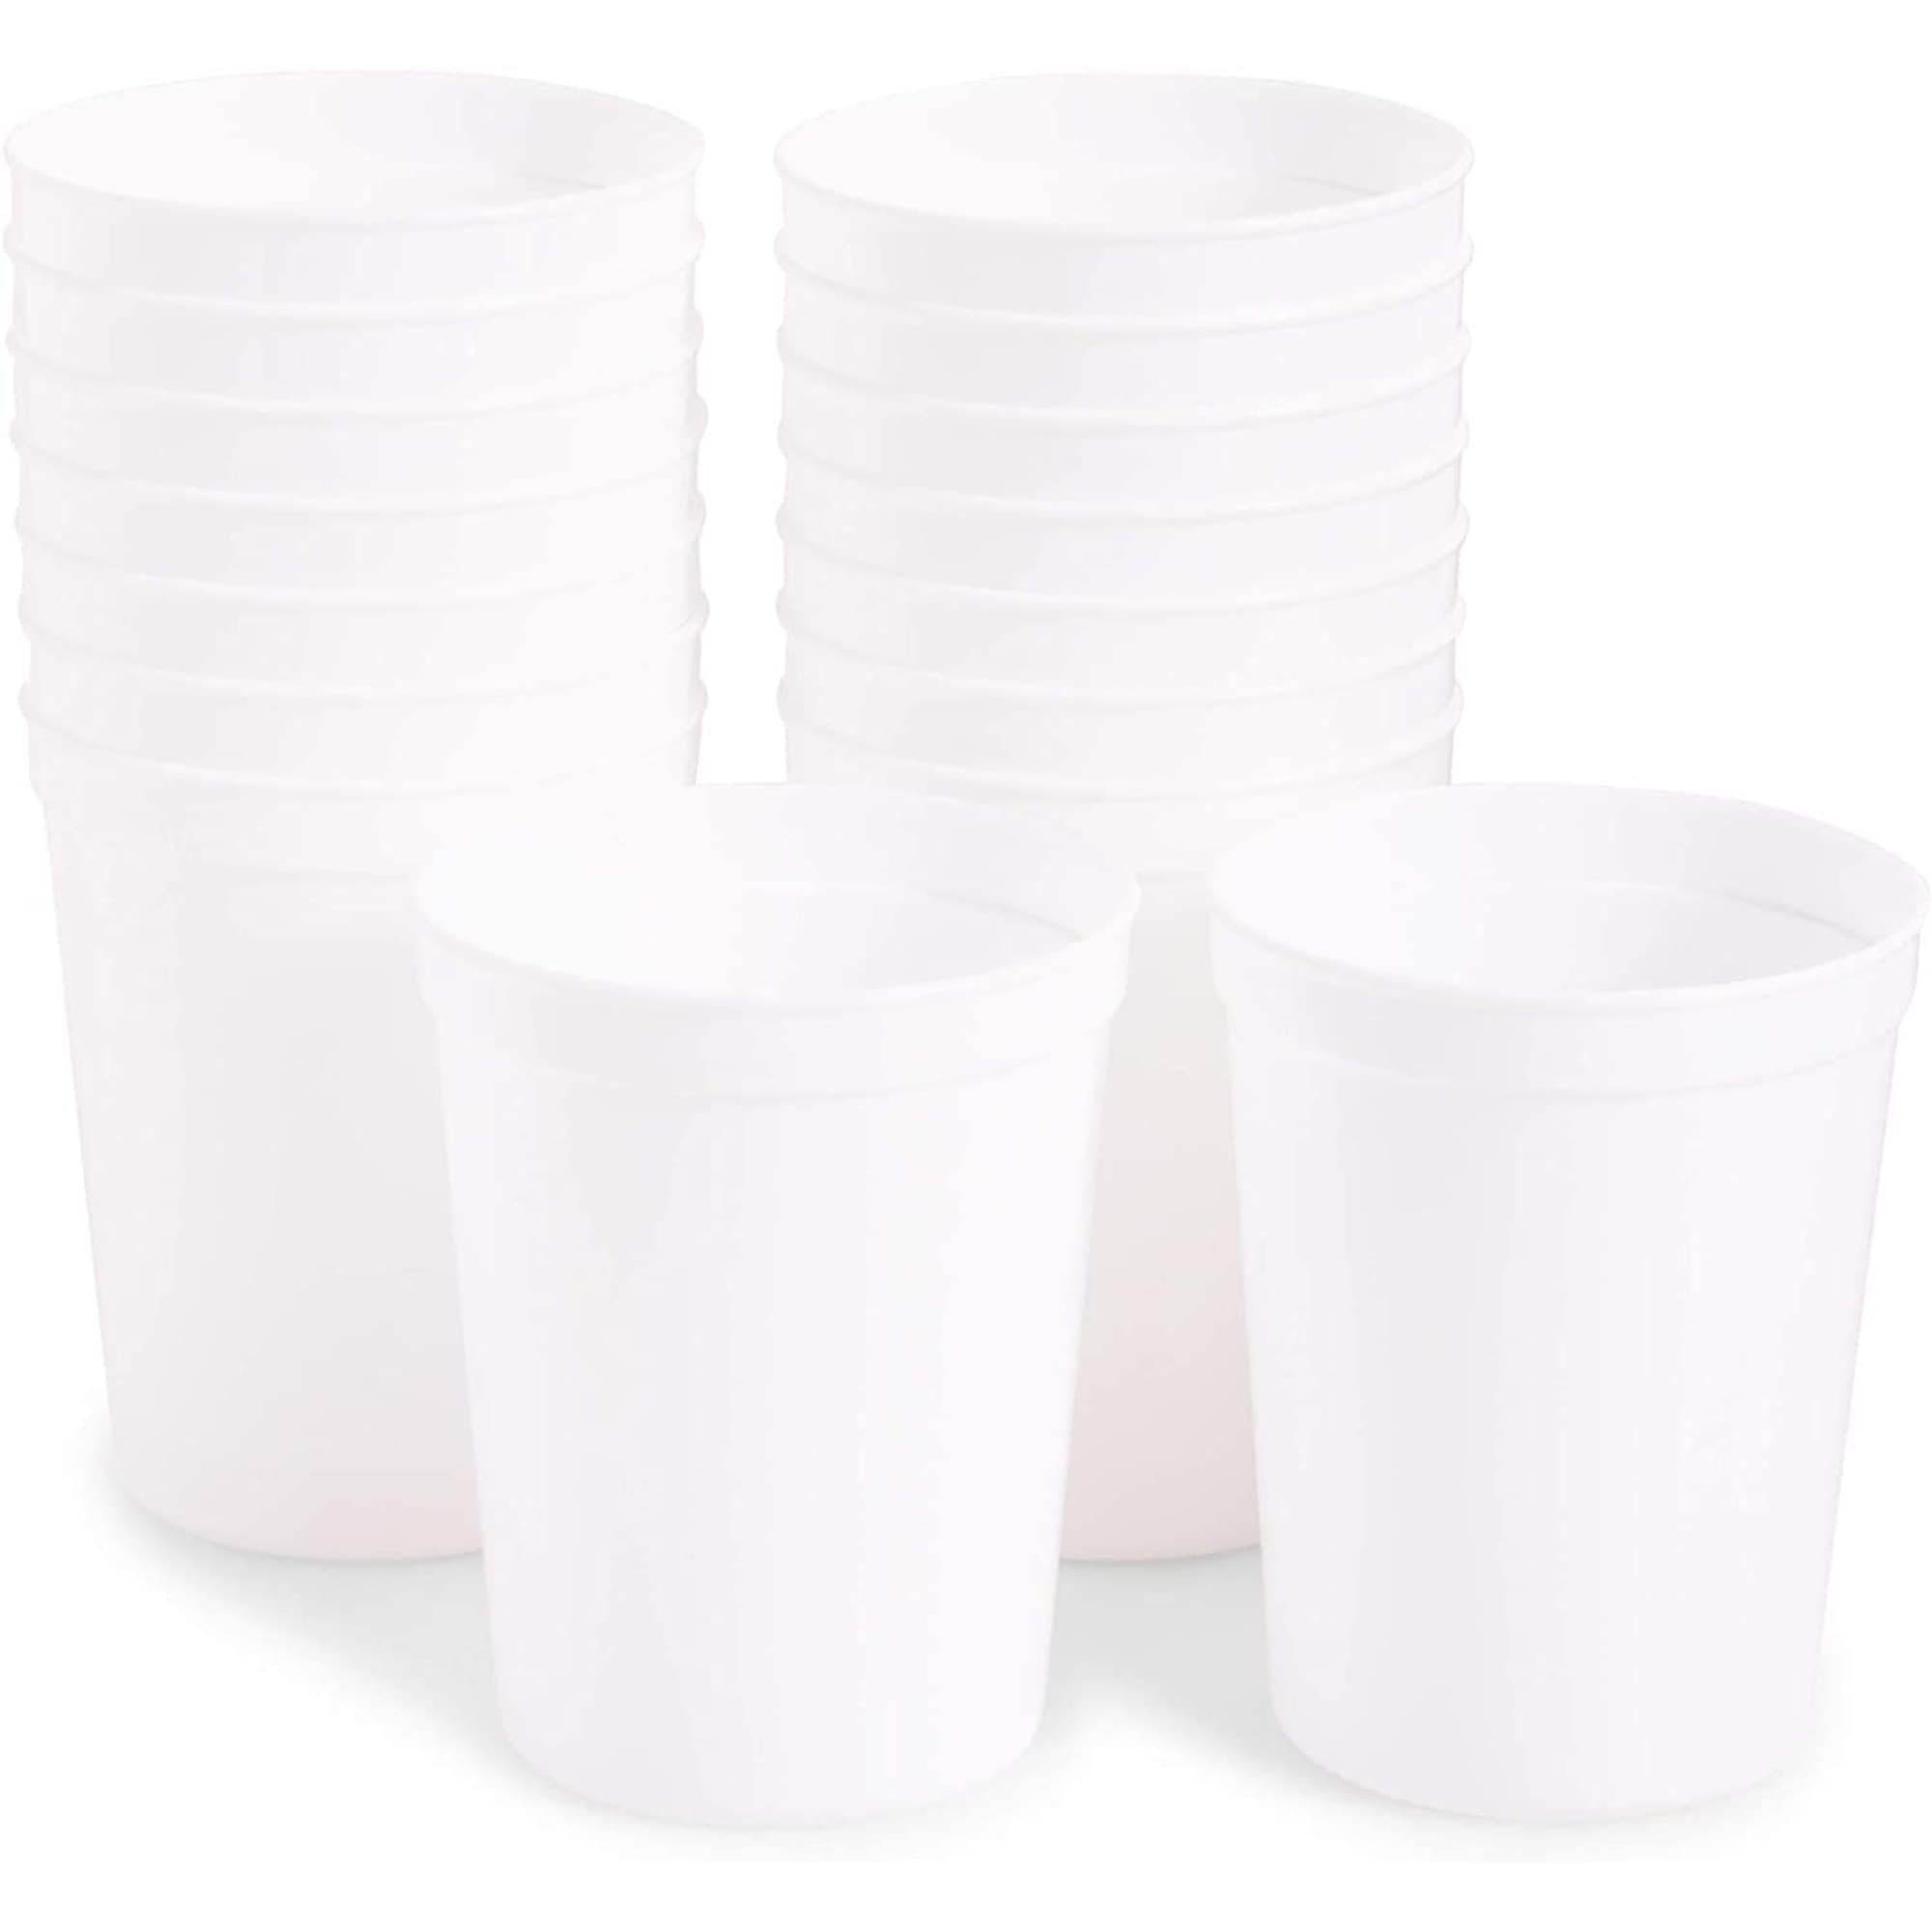 16 oz Reusable Plastic Stadium Cup